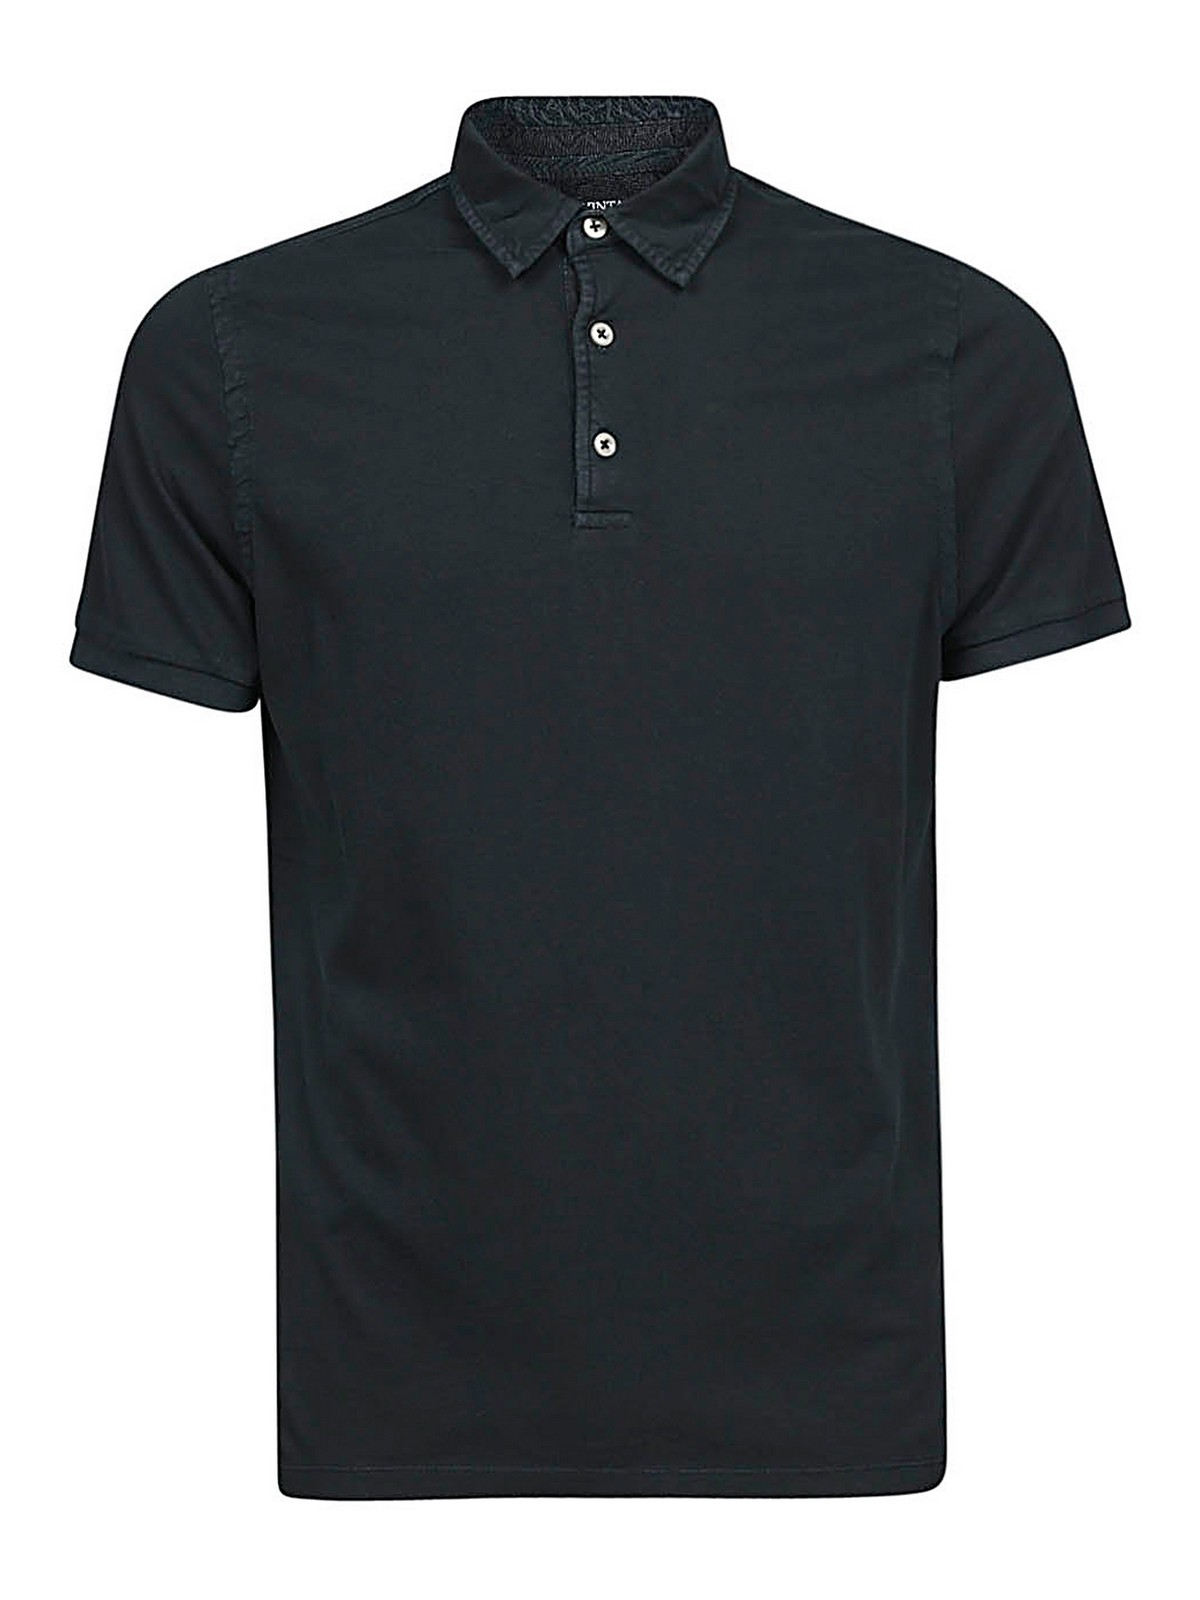 Original Vintage Style Cotton Polo Shirt In Black